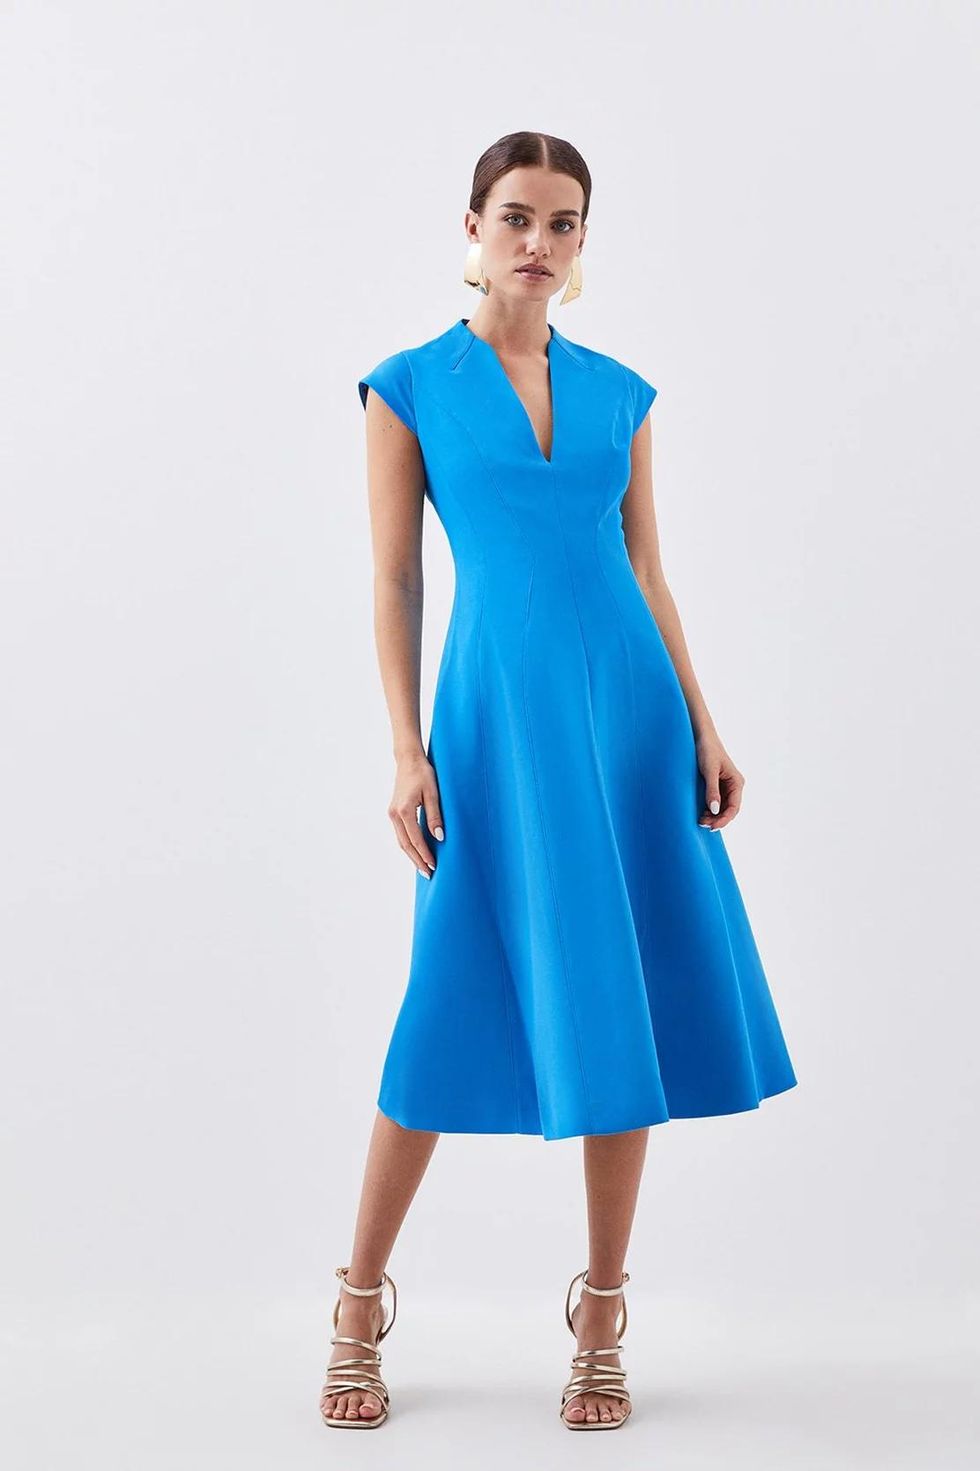 Susanna Reid is radiant in turquoise pencil midi dress